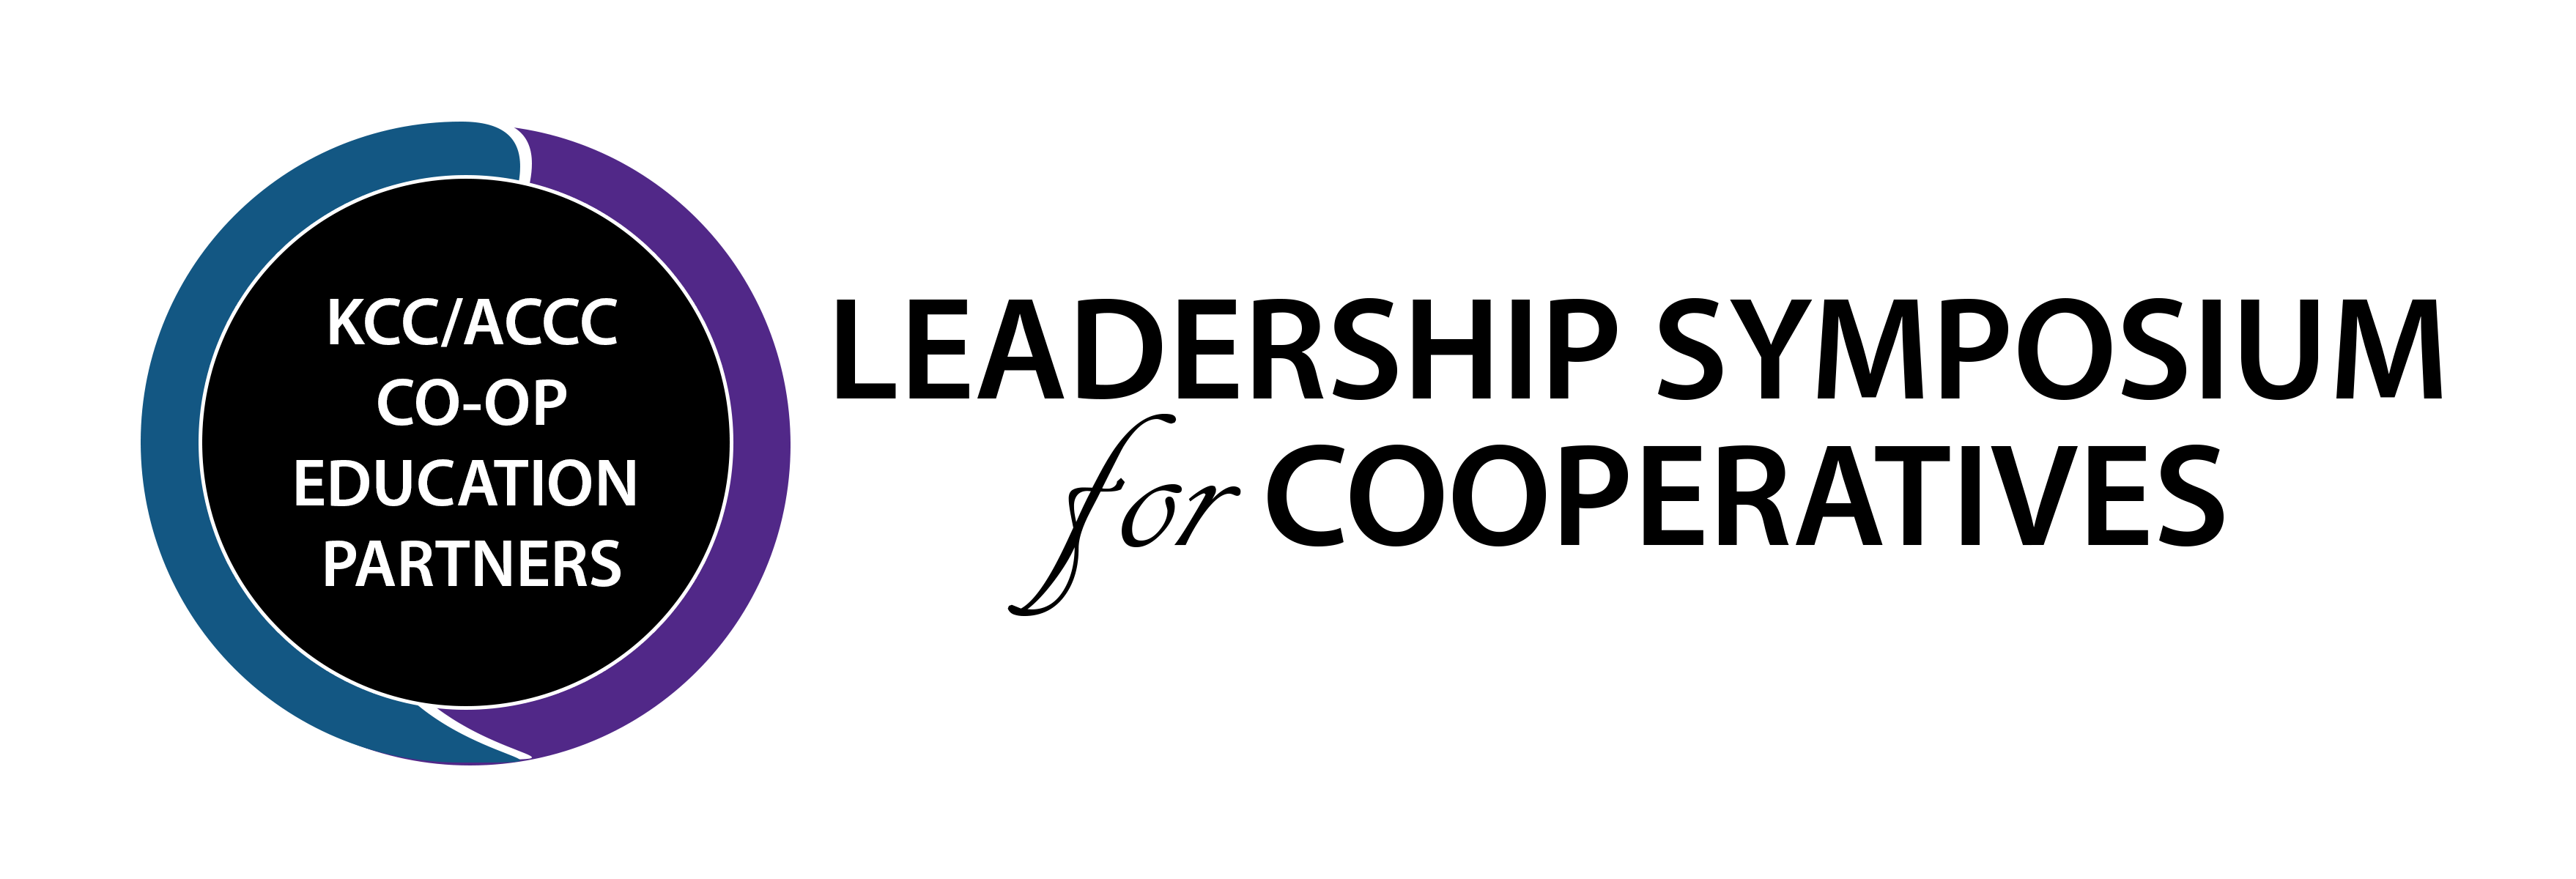 Leadership Symposium logo